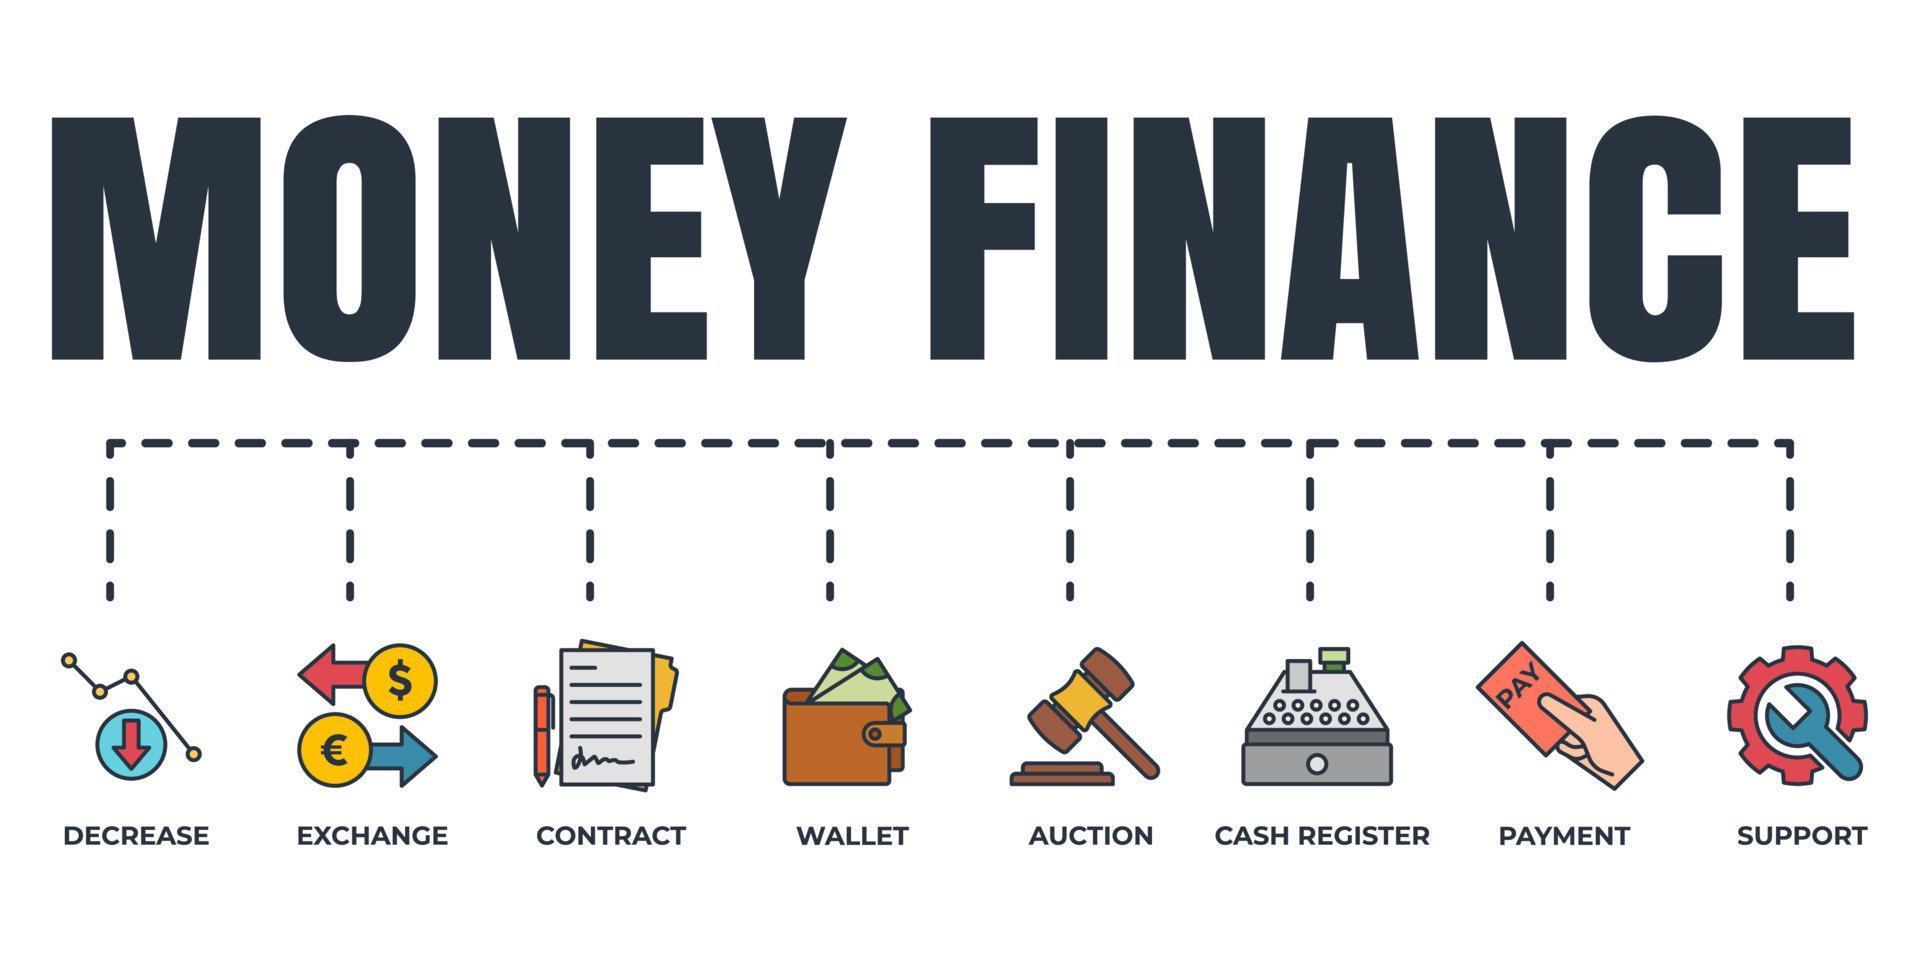 Finance banner web icon set. wallet, cash register, auction, decrease, support, contract, payment, exchange vector illustration concept.